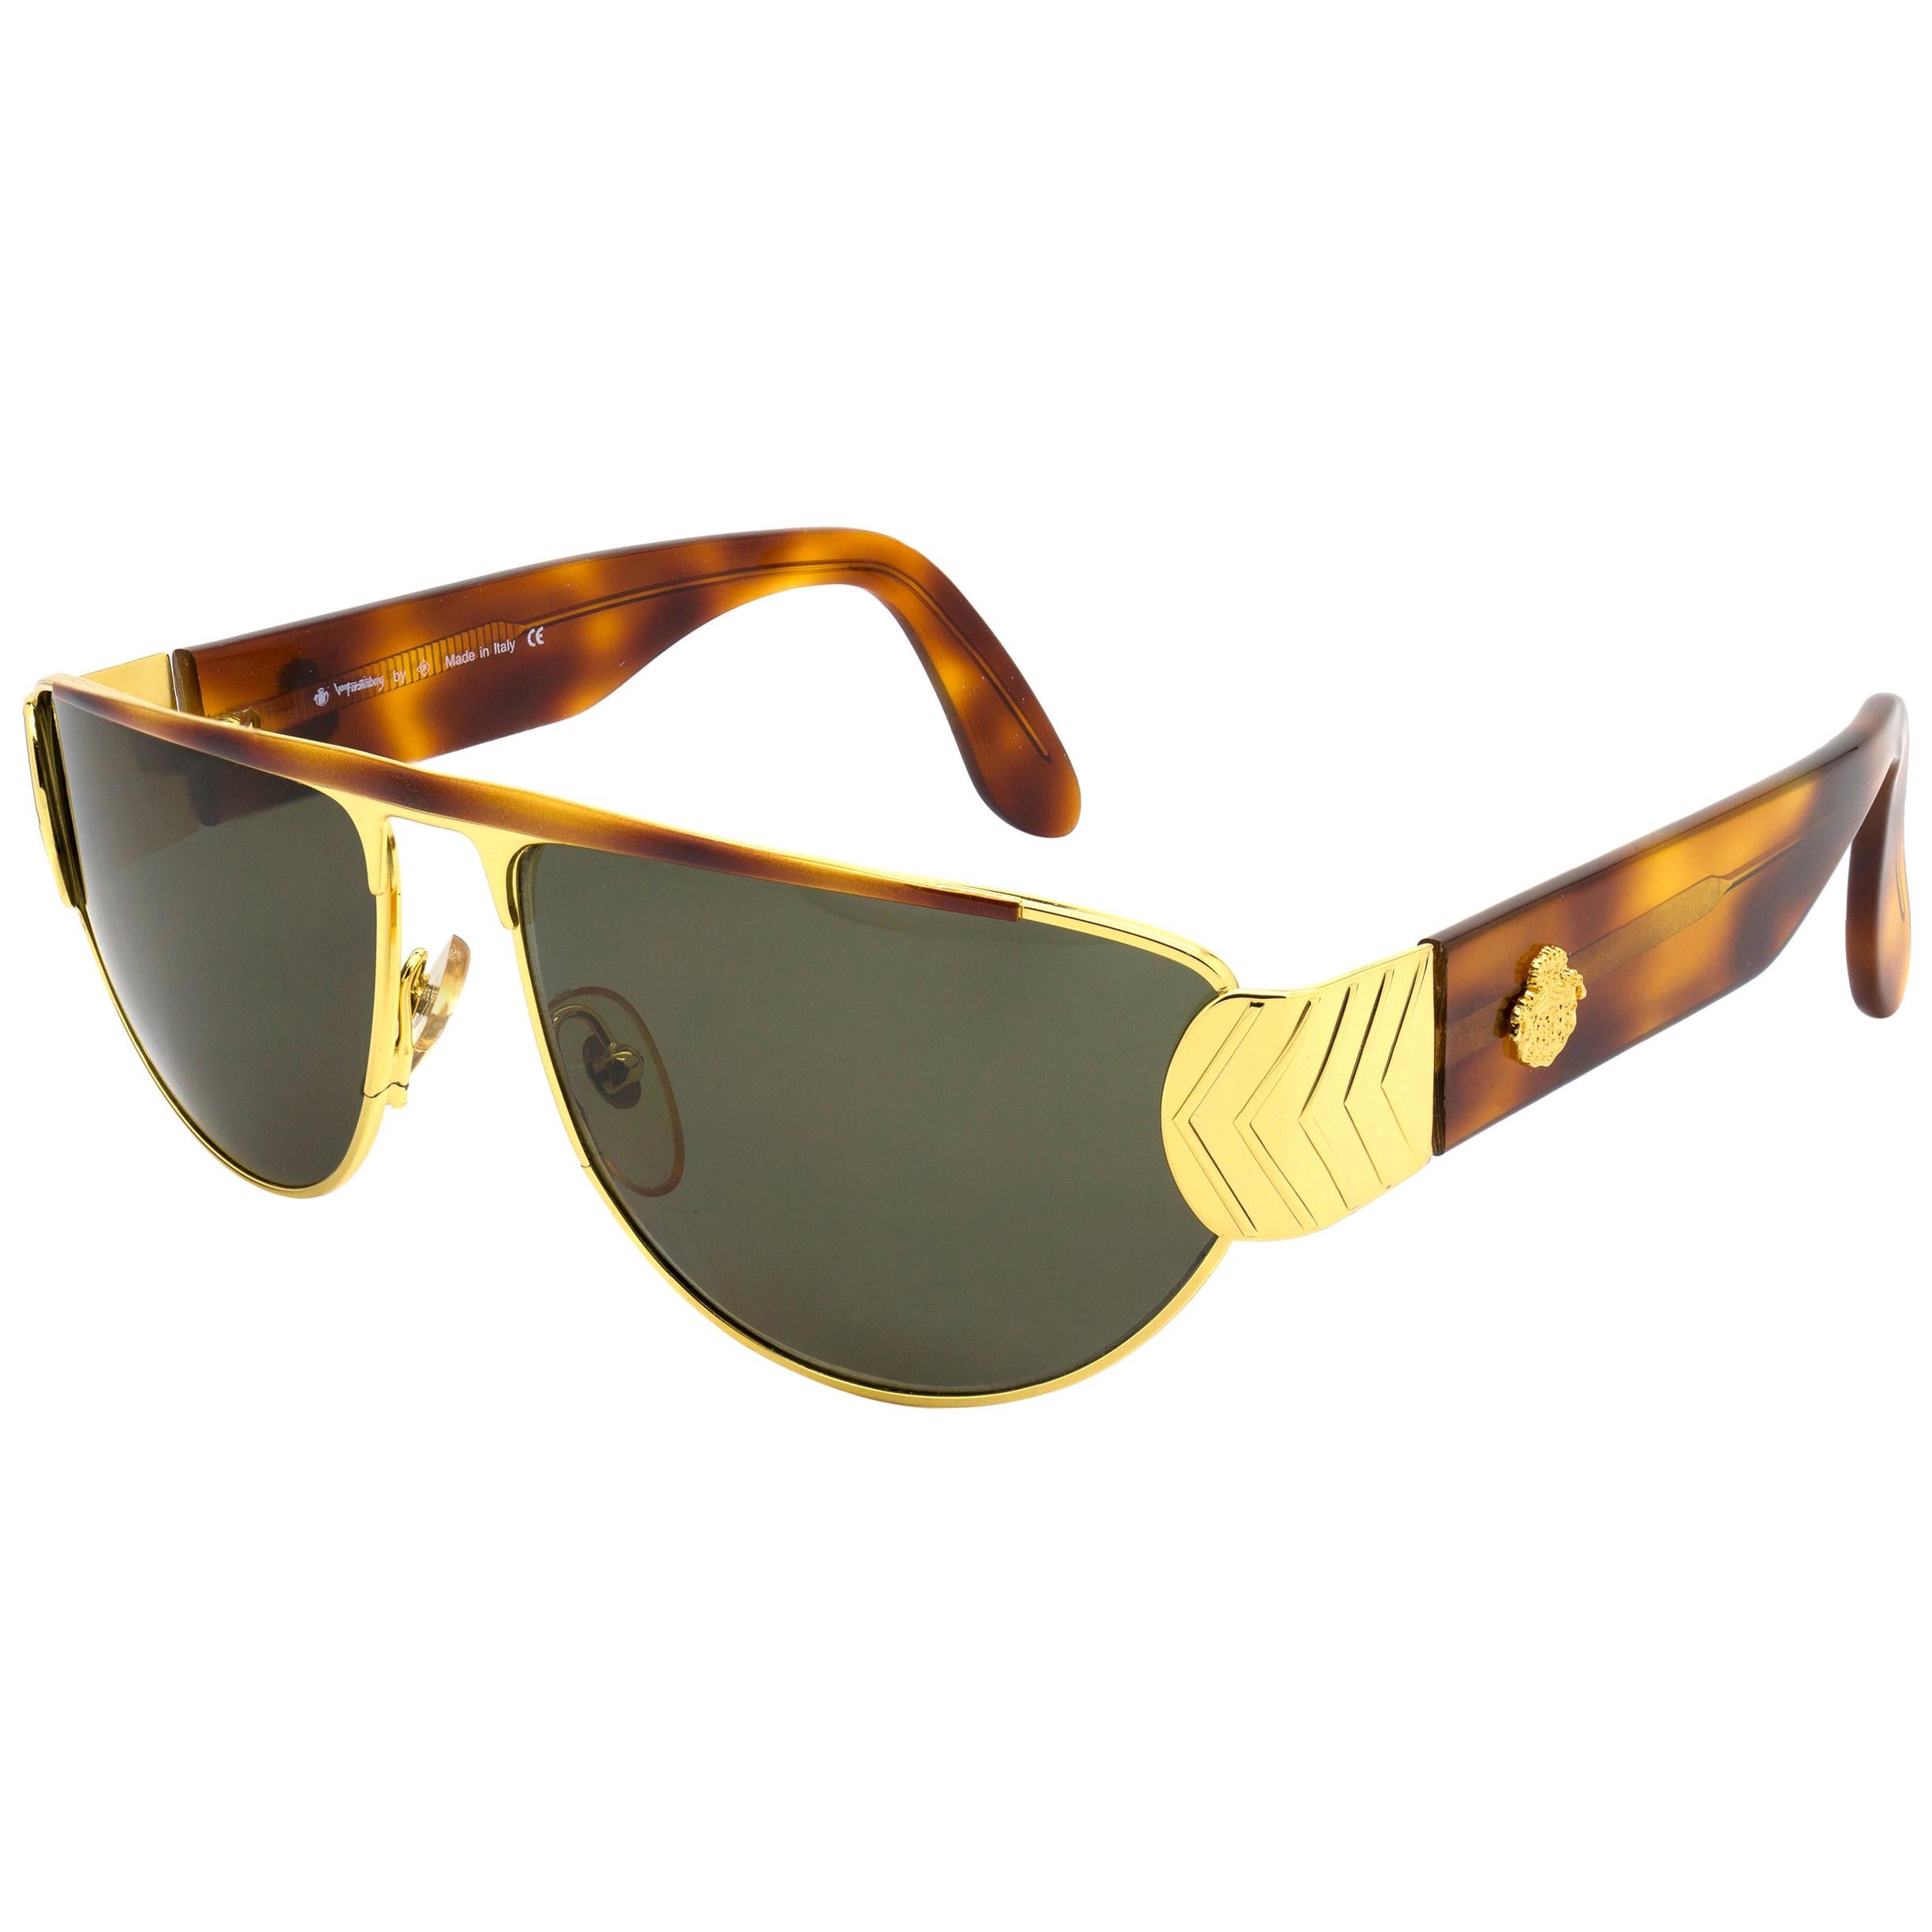 Egon Von Furstenberg aviator sunglasses, Italy 80s For Sale